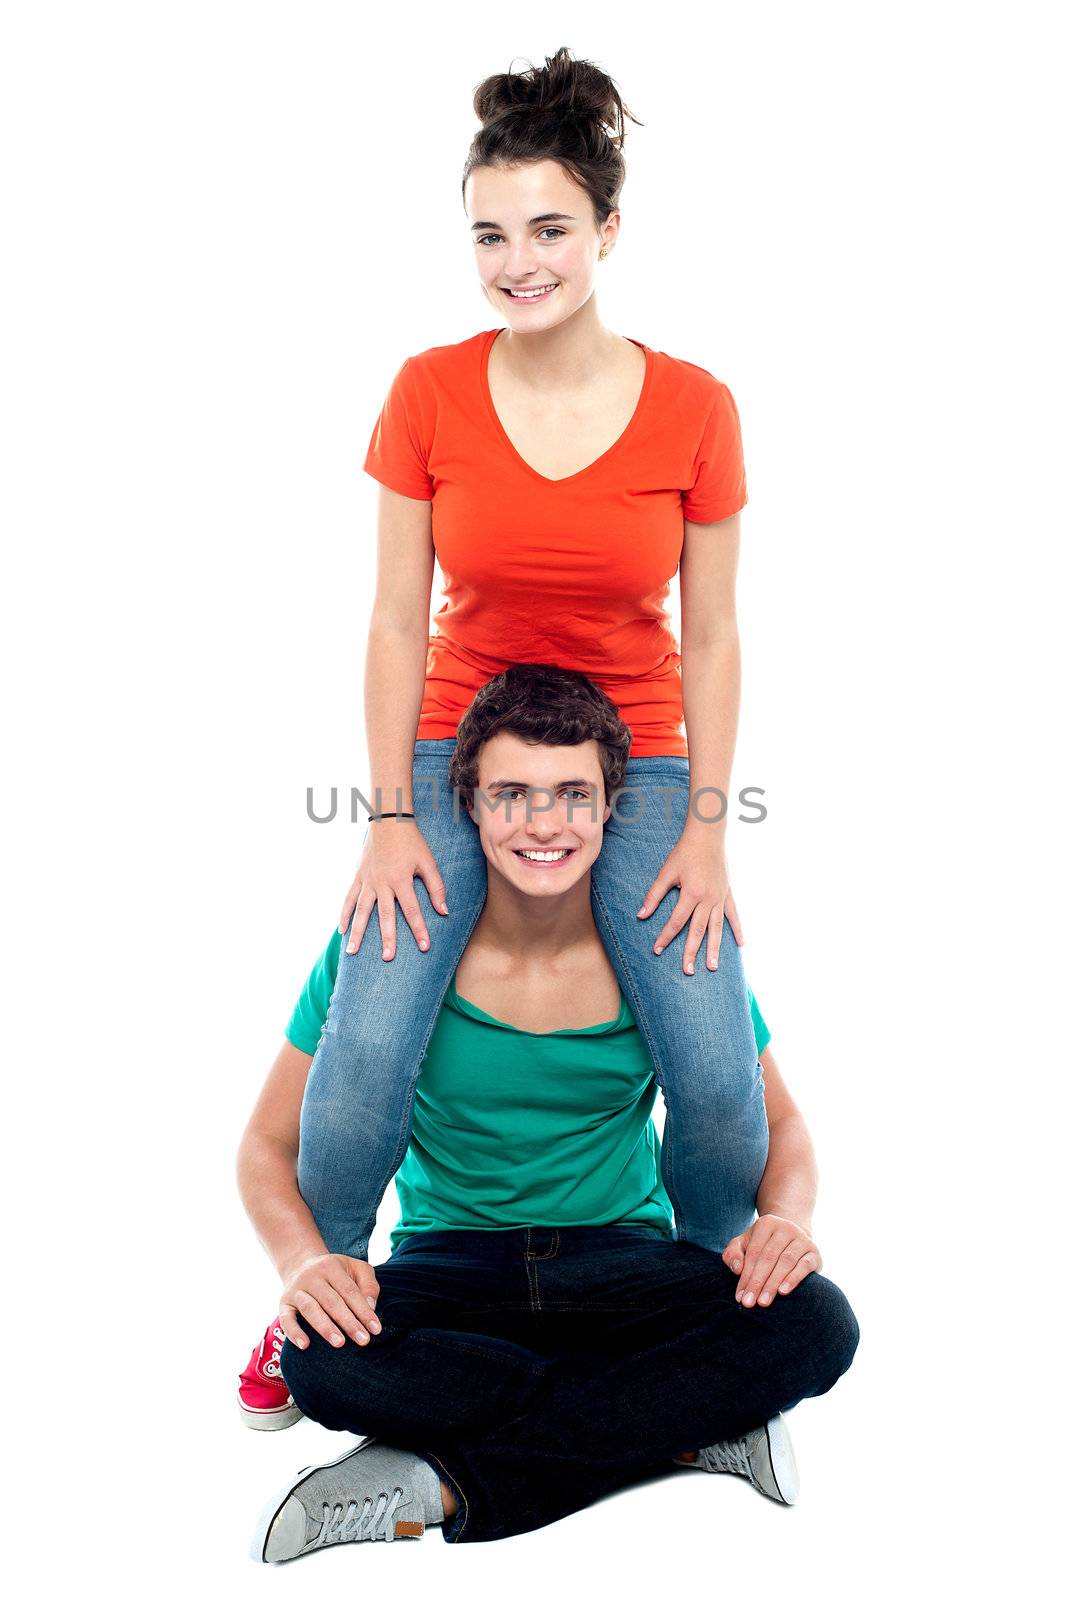 Girl riding on her boyfriend's shoulder. Both having fun